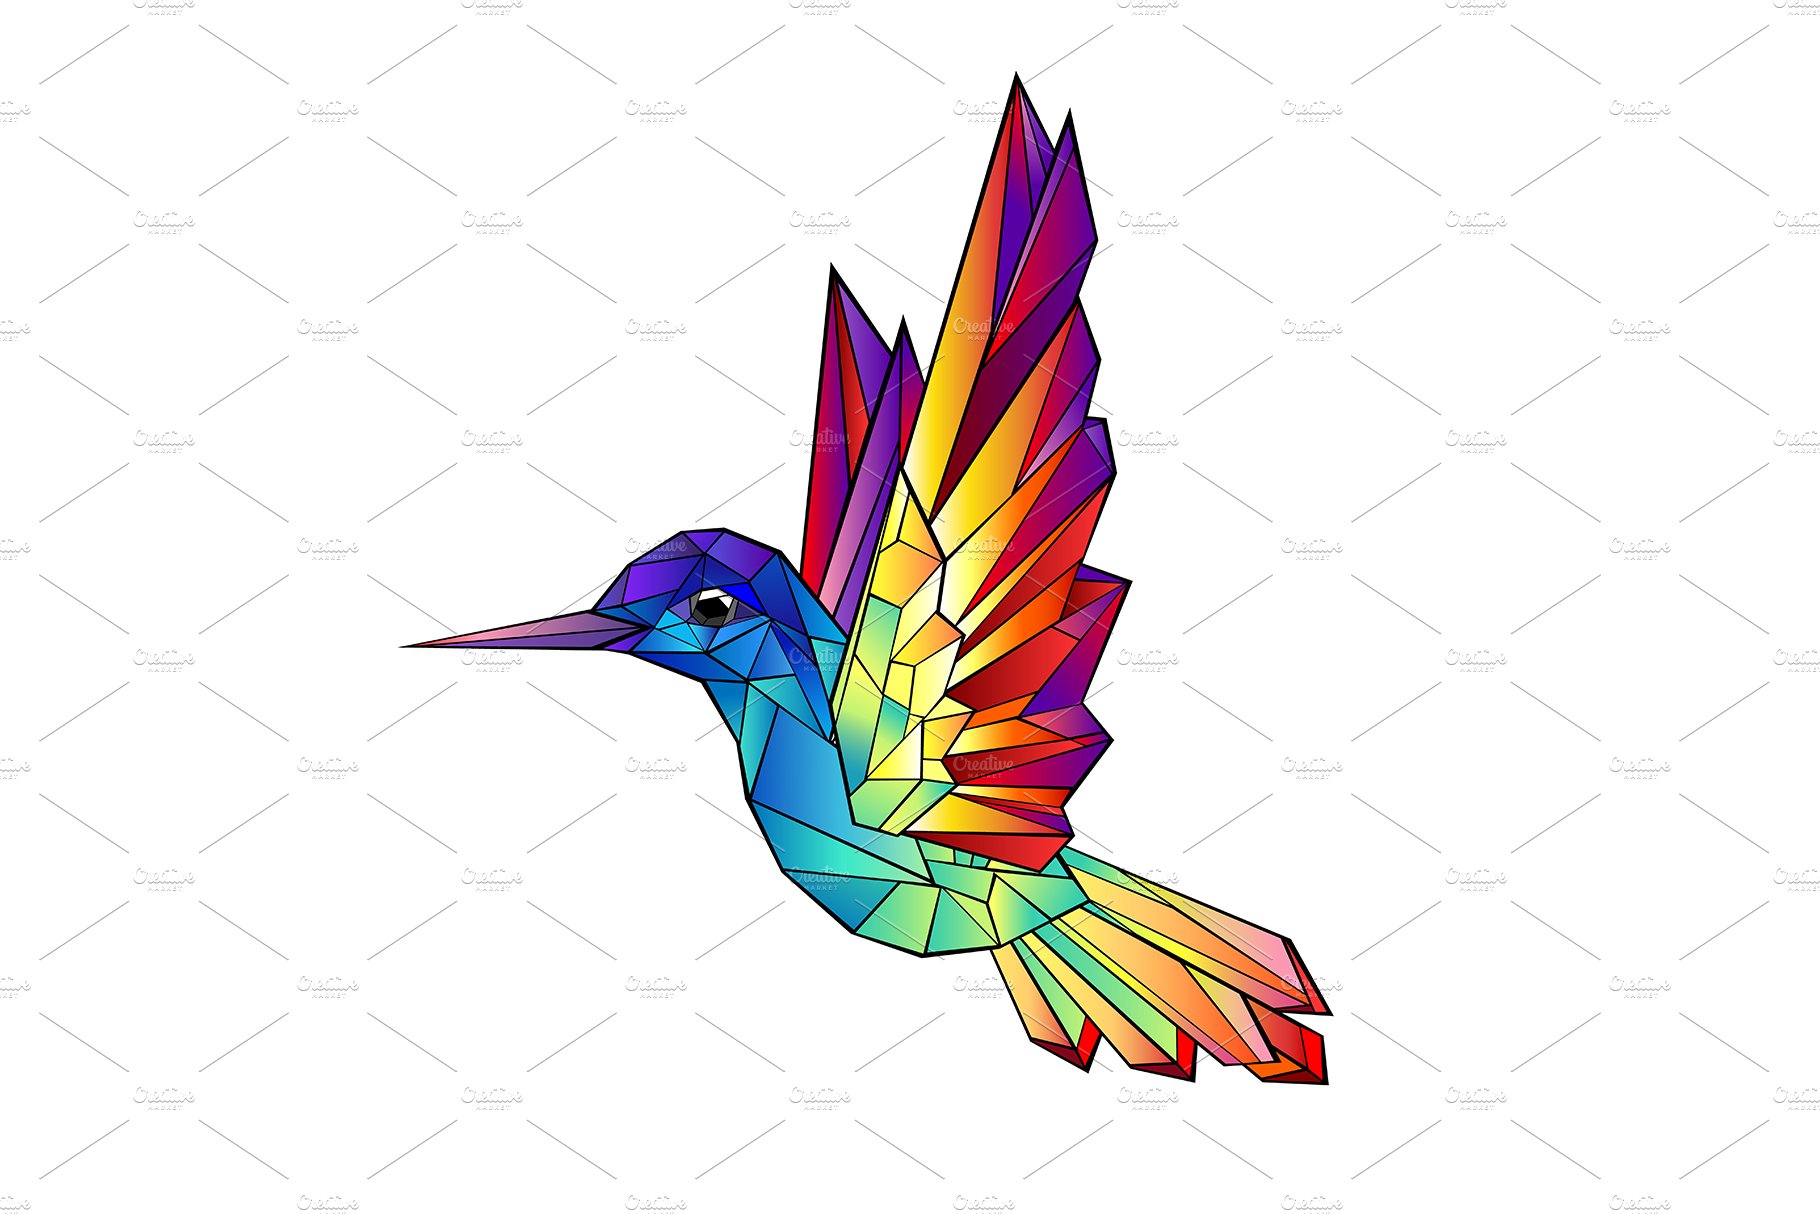 Rainbow Hummingbird cover image.